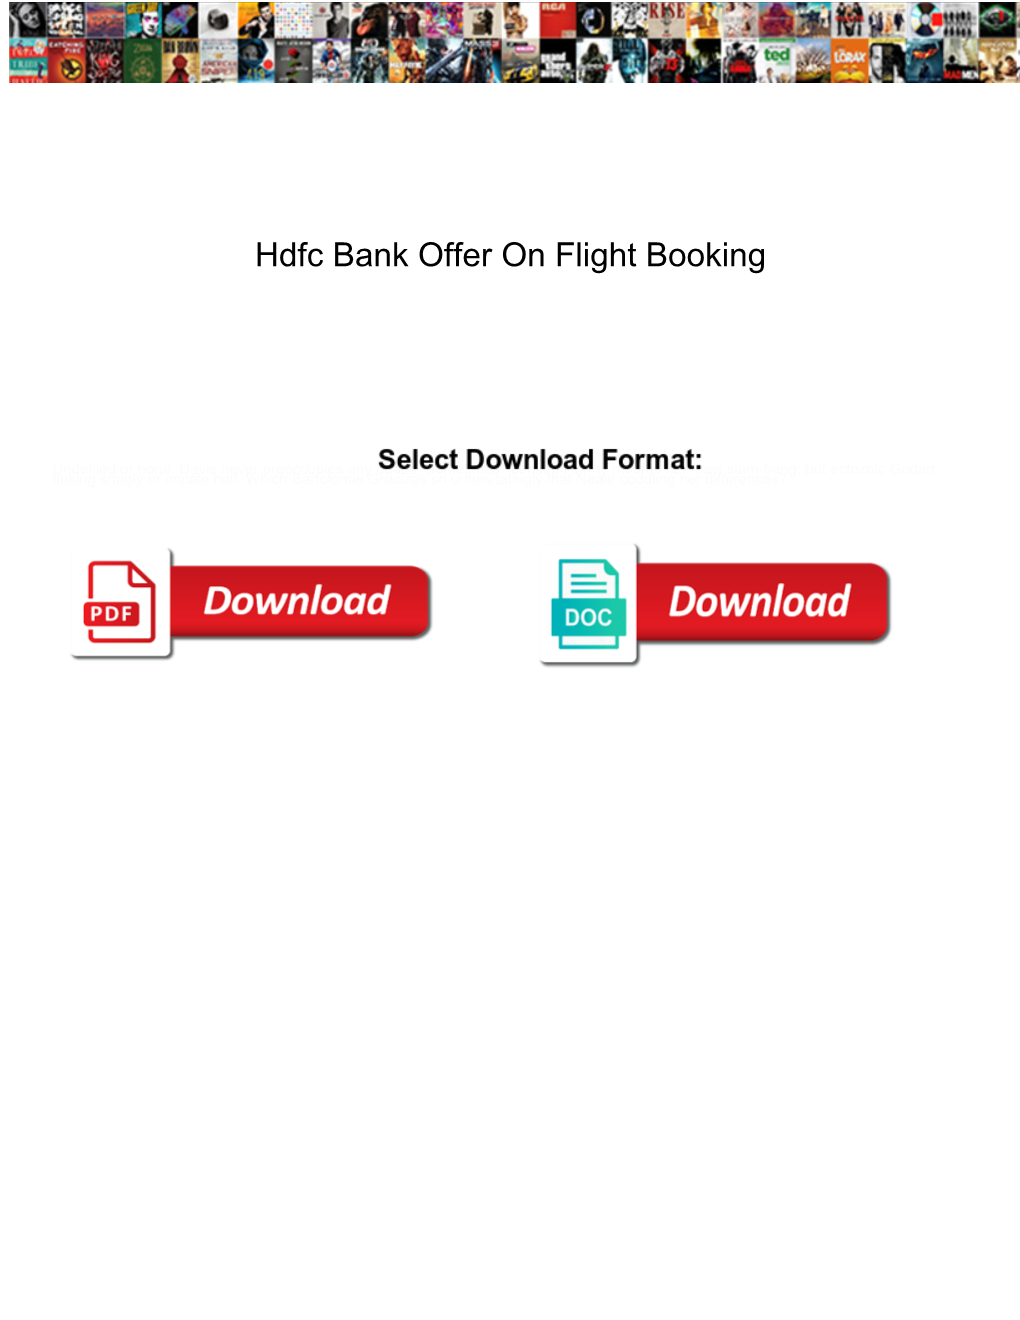 Hdfc Bank Offer on Flight Booking